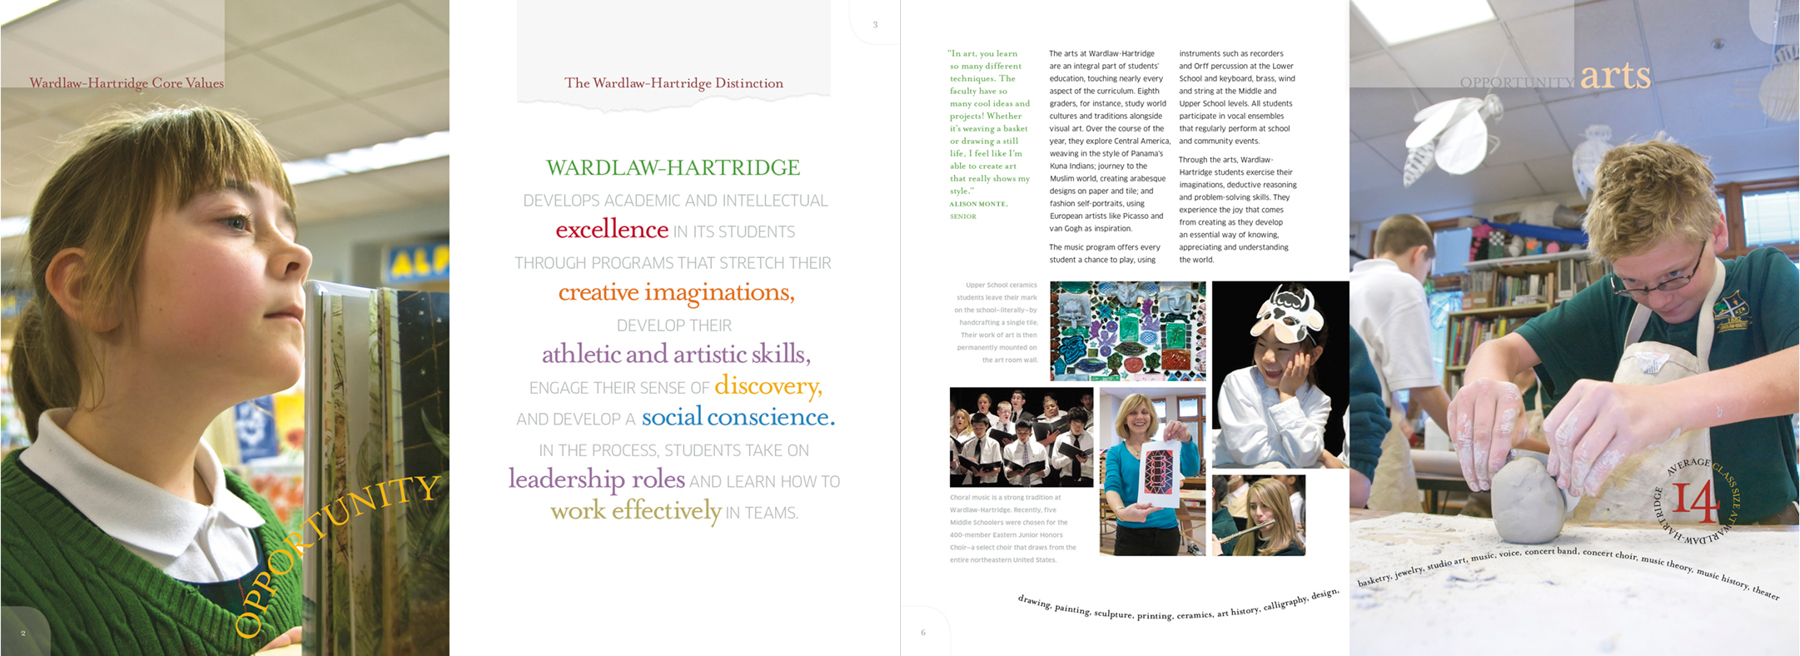 Wardlaw Hartridge Prep School Viewbook by Granite Bay Graphic Design